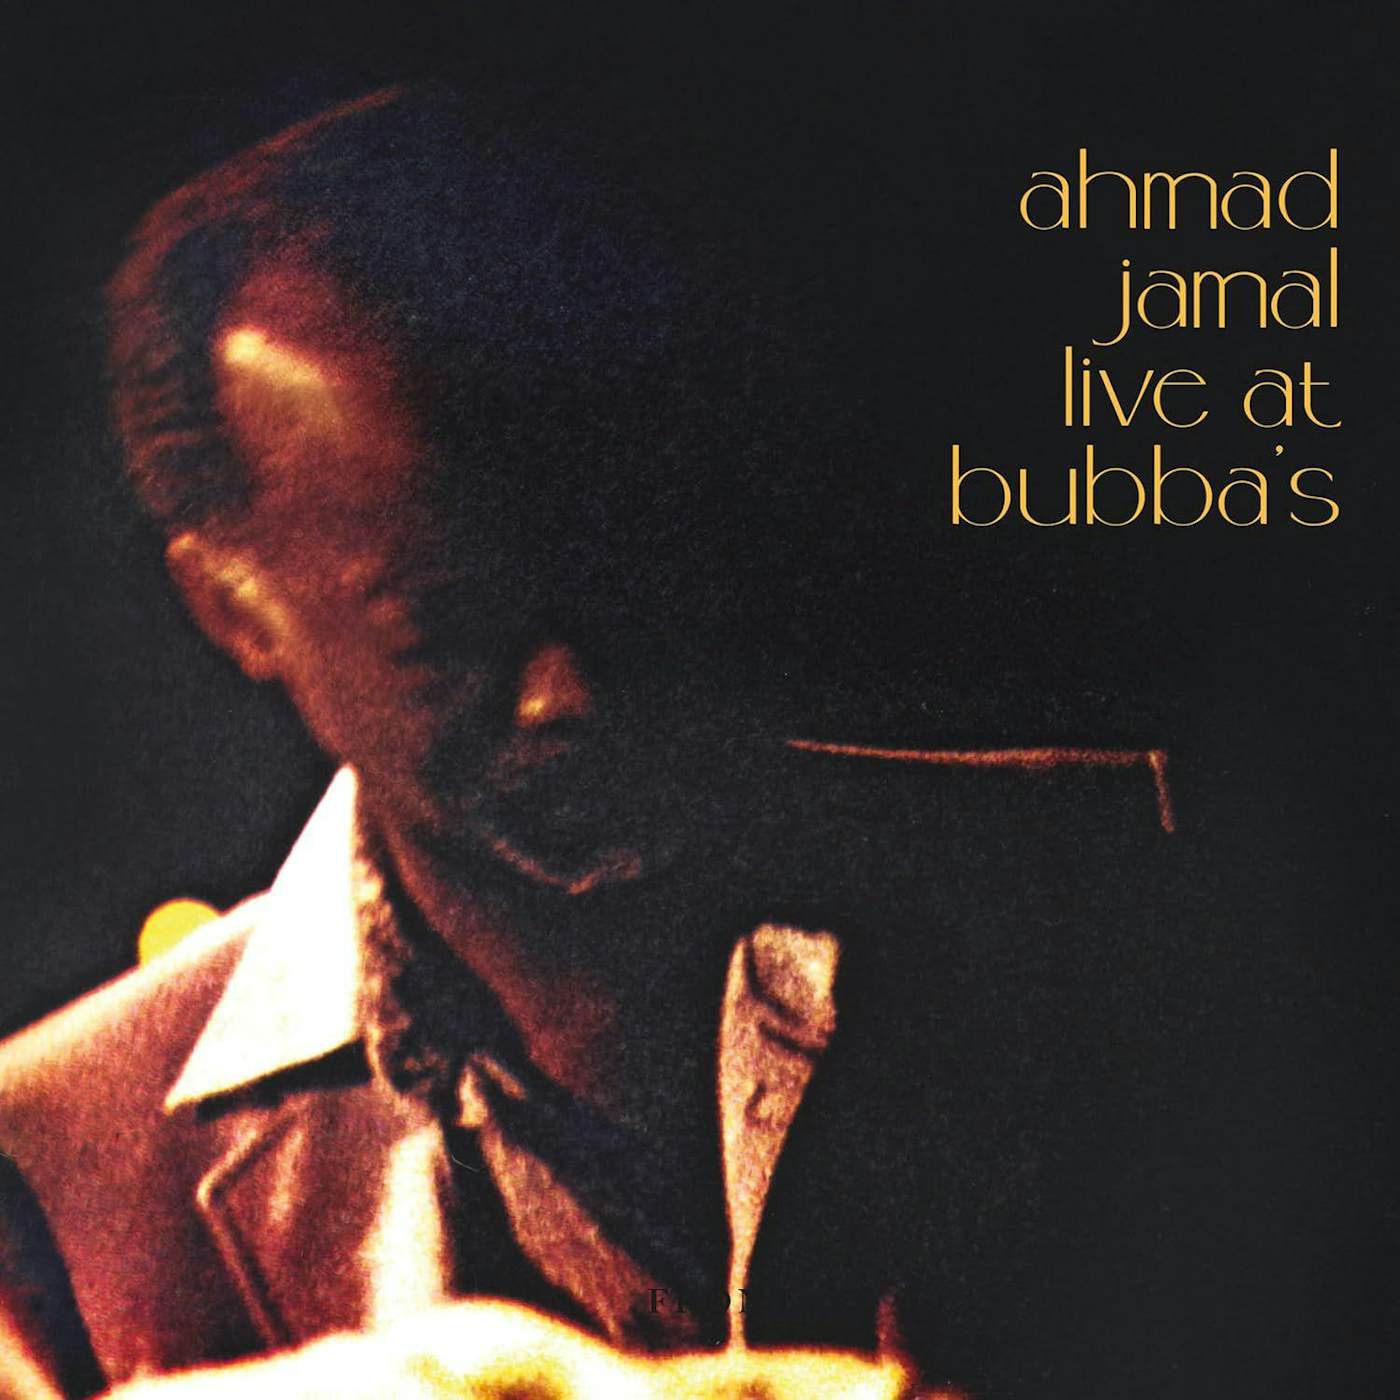 Ahmad Jamal Live At Bubba's Vinyl Record